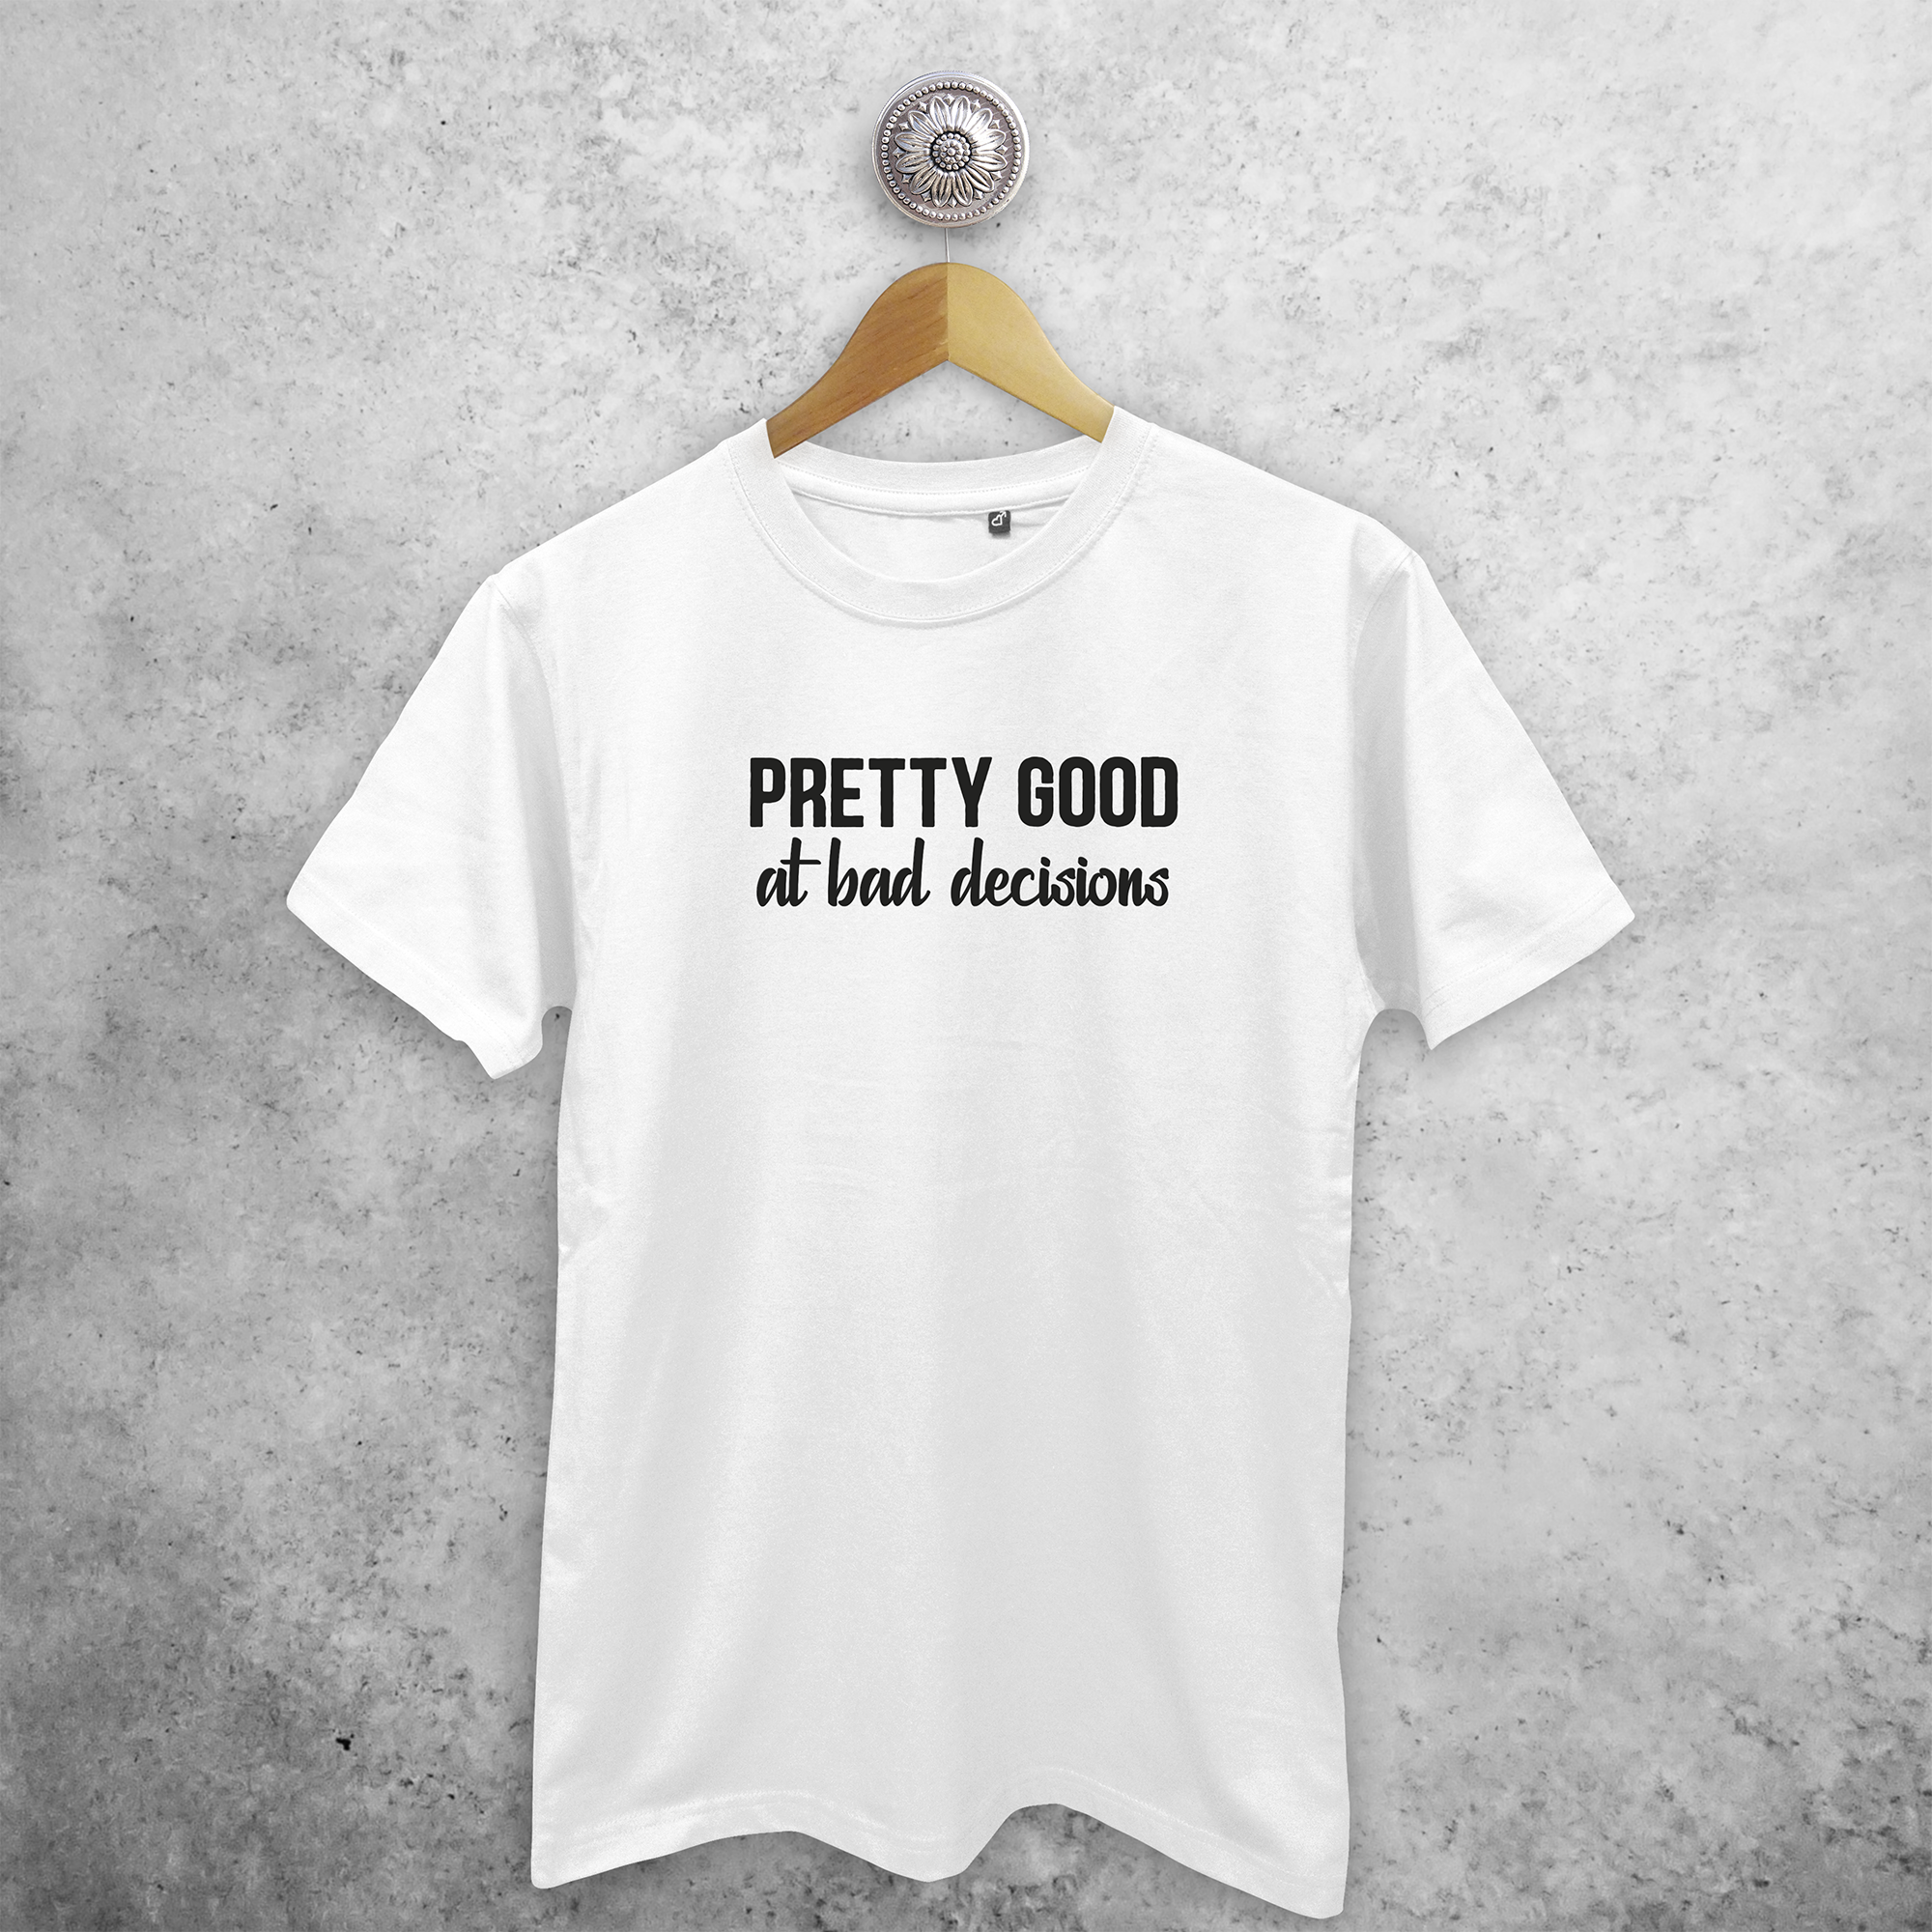 'Pretty good at bad decisions' volwassene shirt